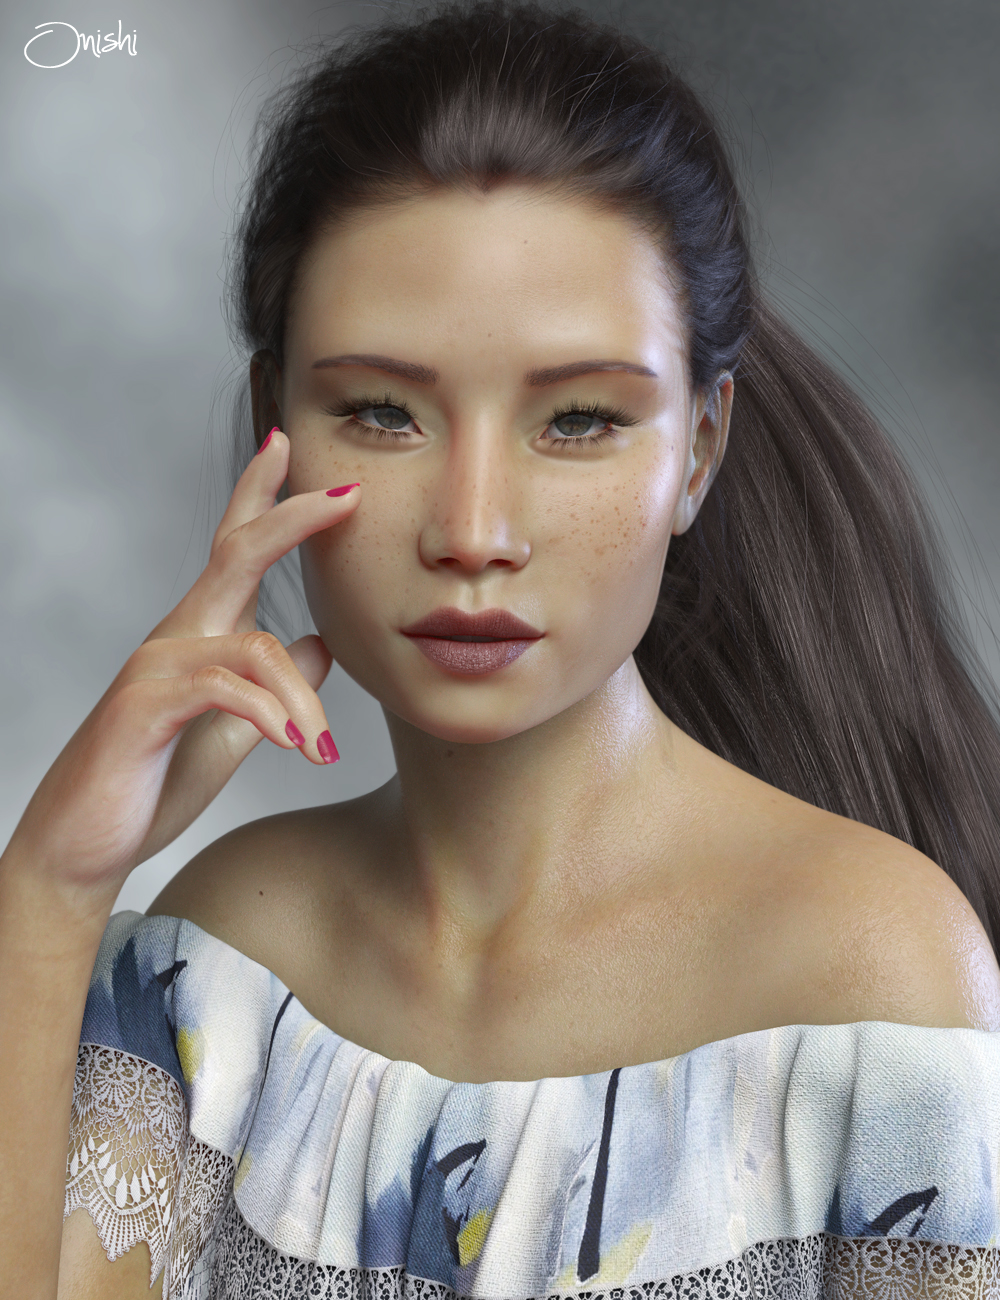 PS Onishi for Genesis 8 Female & Victoria 8 by: Pixelunashadownet, 3D Models by Daz 3D